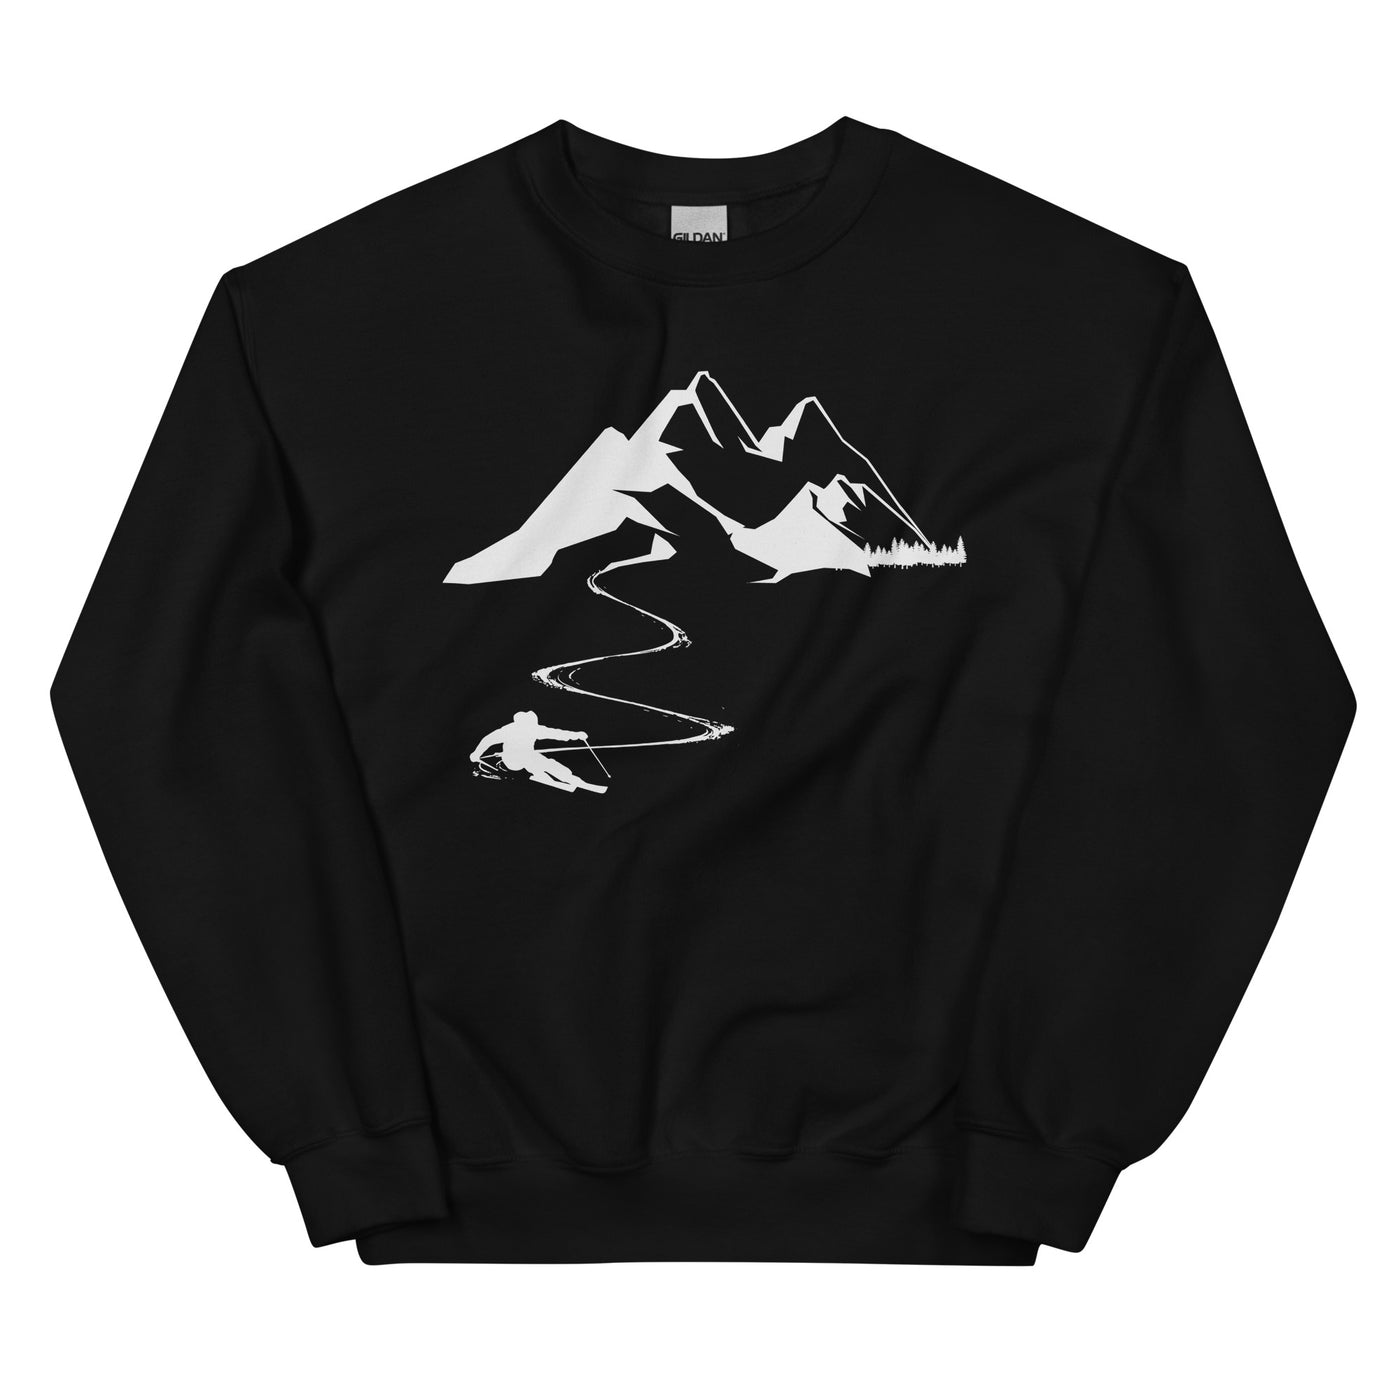 Skisüchtig - Sweatshirt (Unisex) klettern ski xxx yyy zzz Black